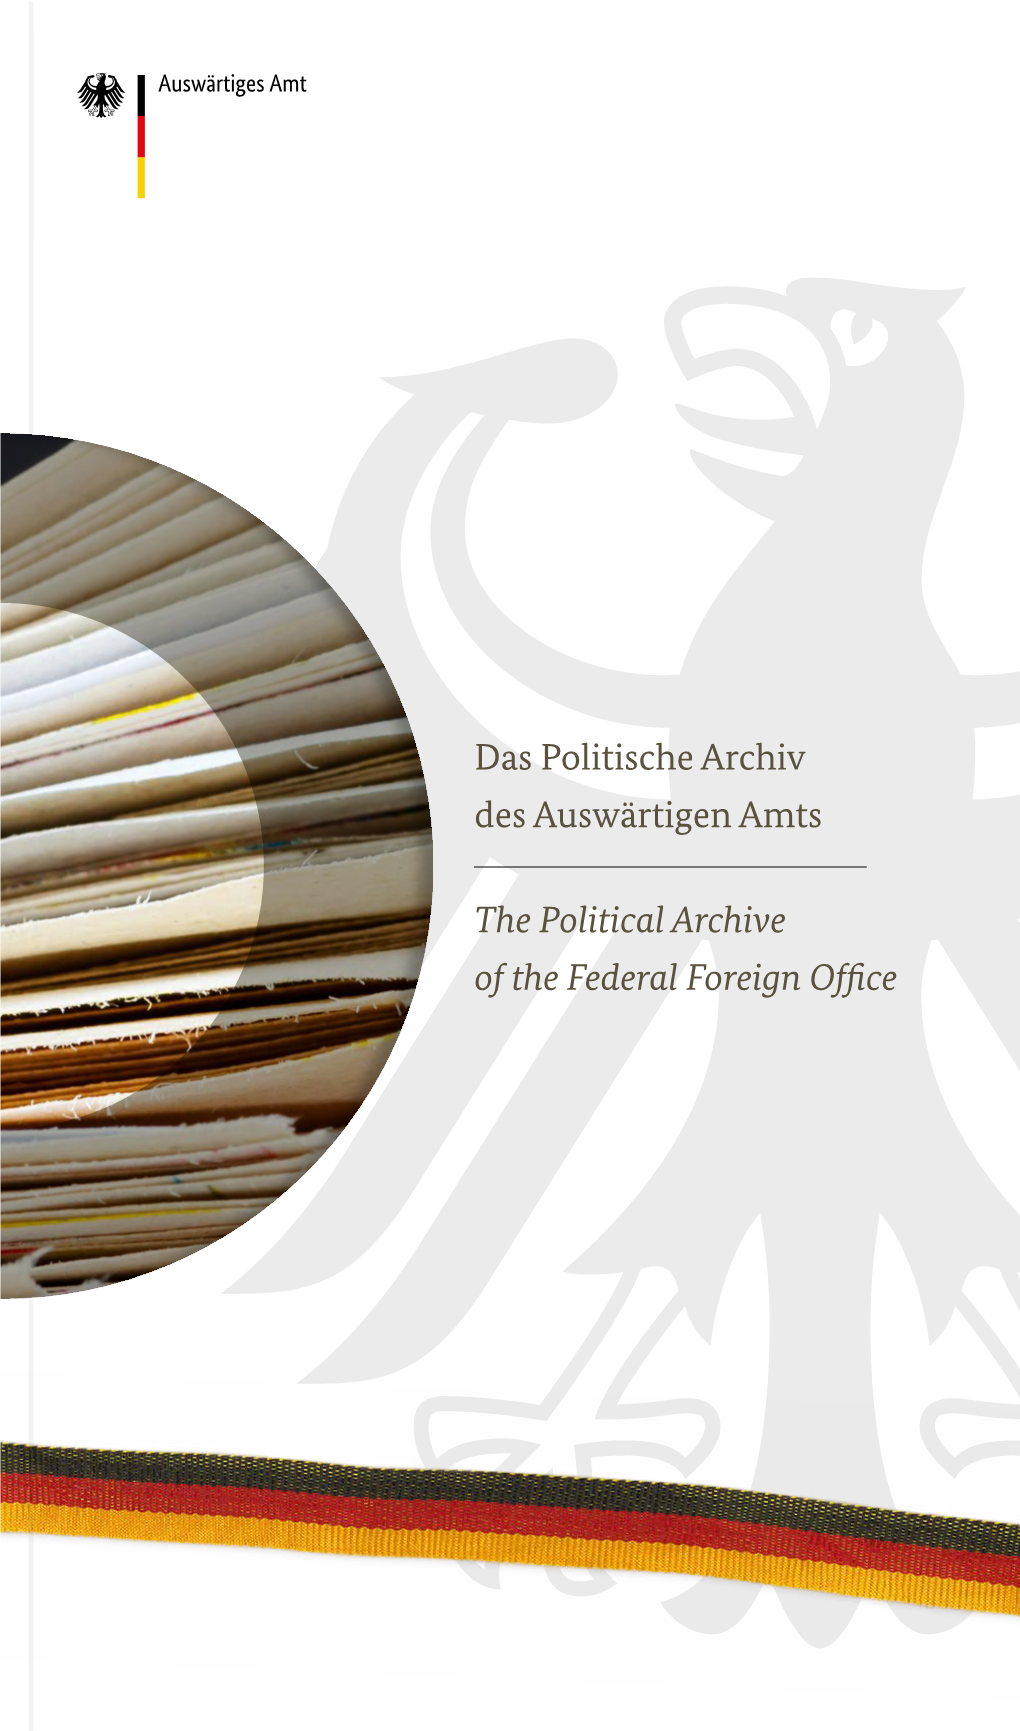 The Political Archive of the Federal Foreign Office Etwa 27.000 Laufende Meter Akten Und Verträge